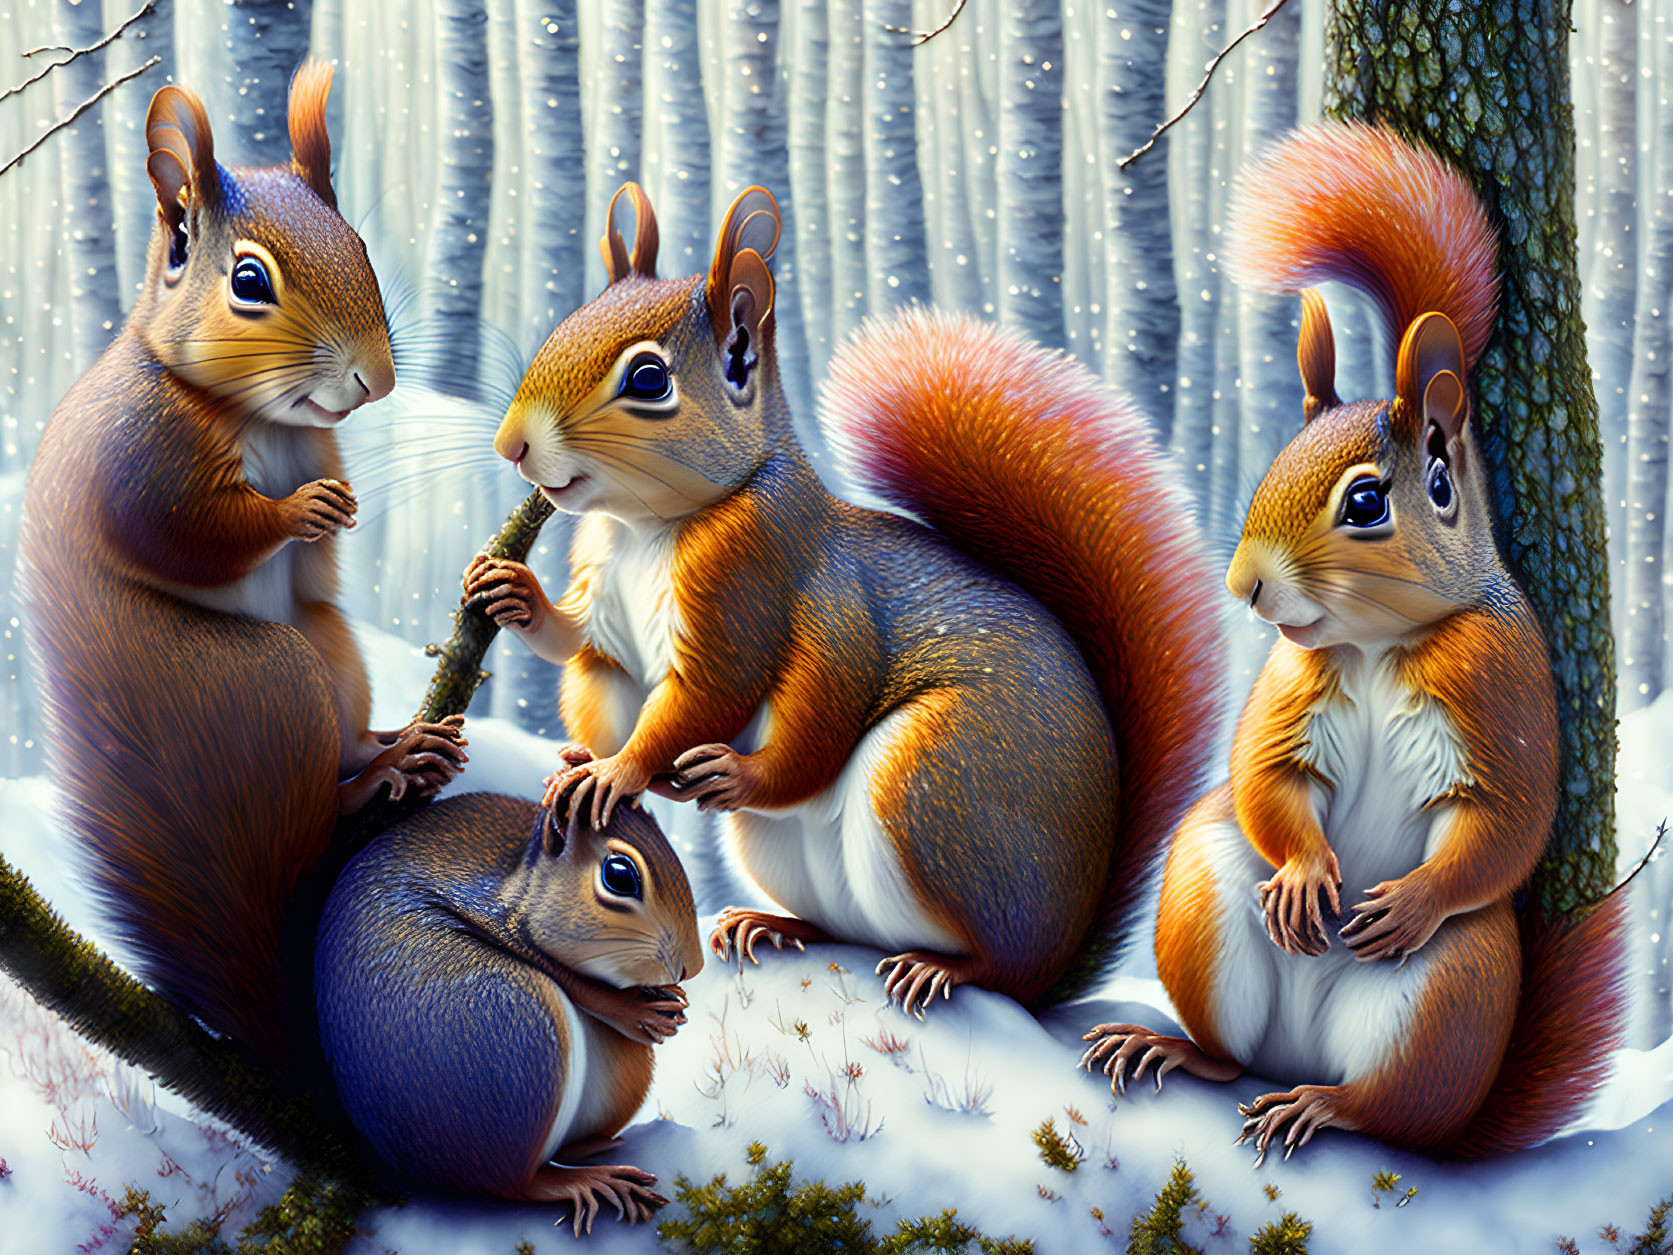 Squirrel family